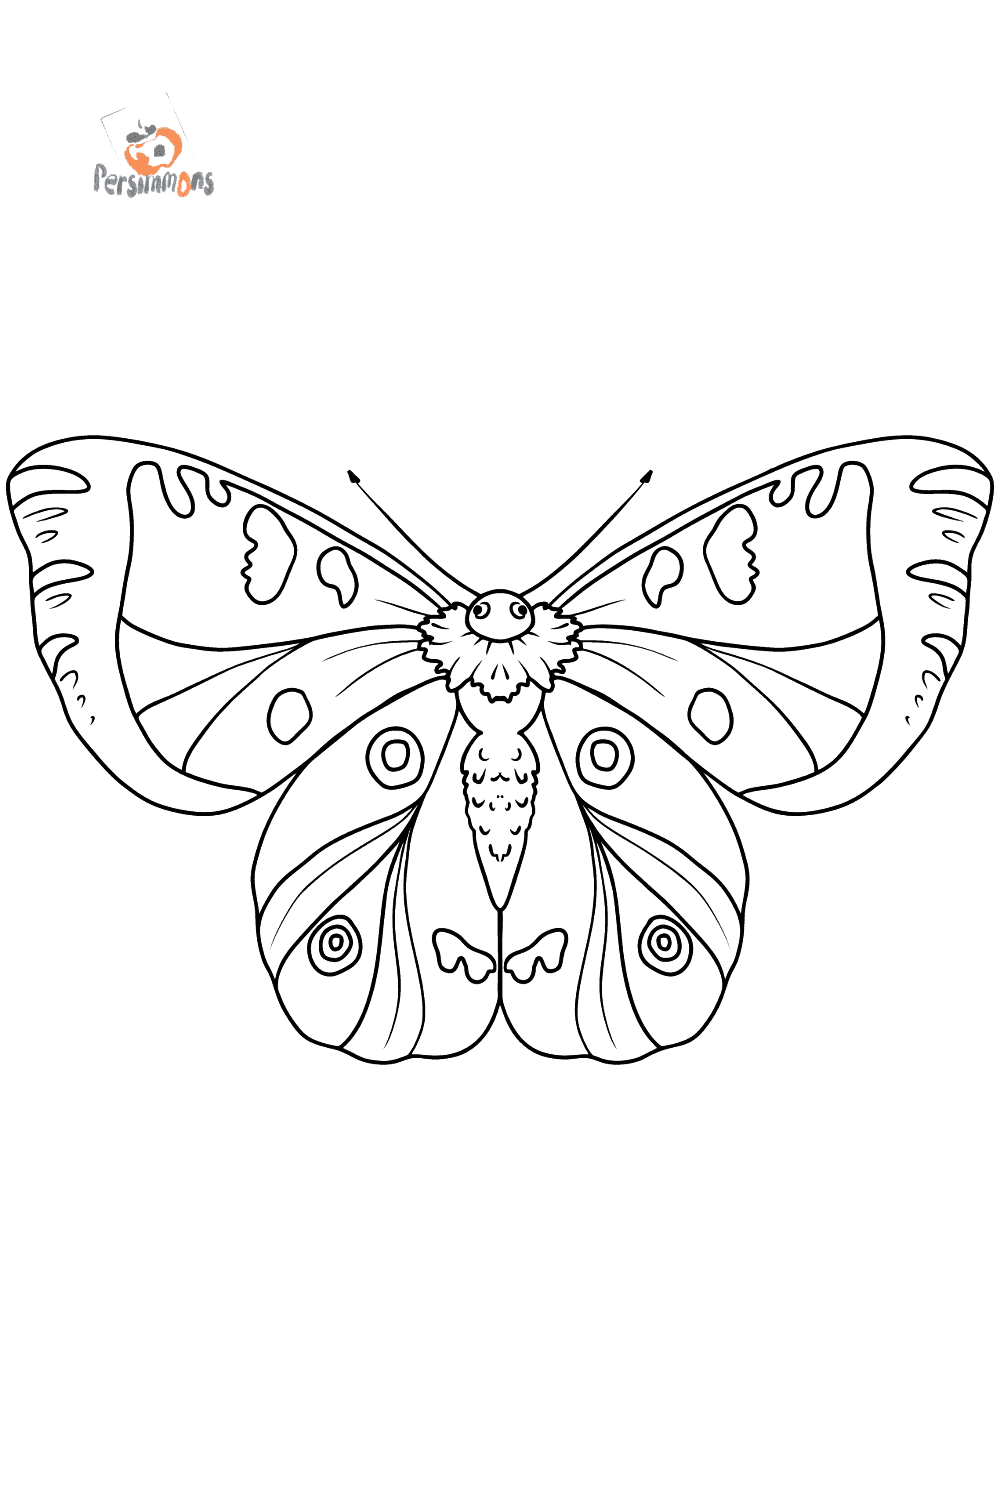 Бабочка Аполлон раскраска